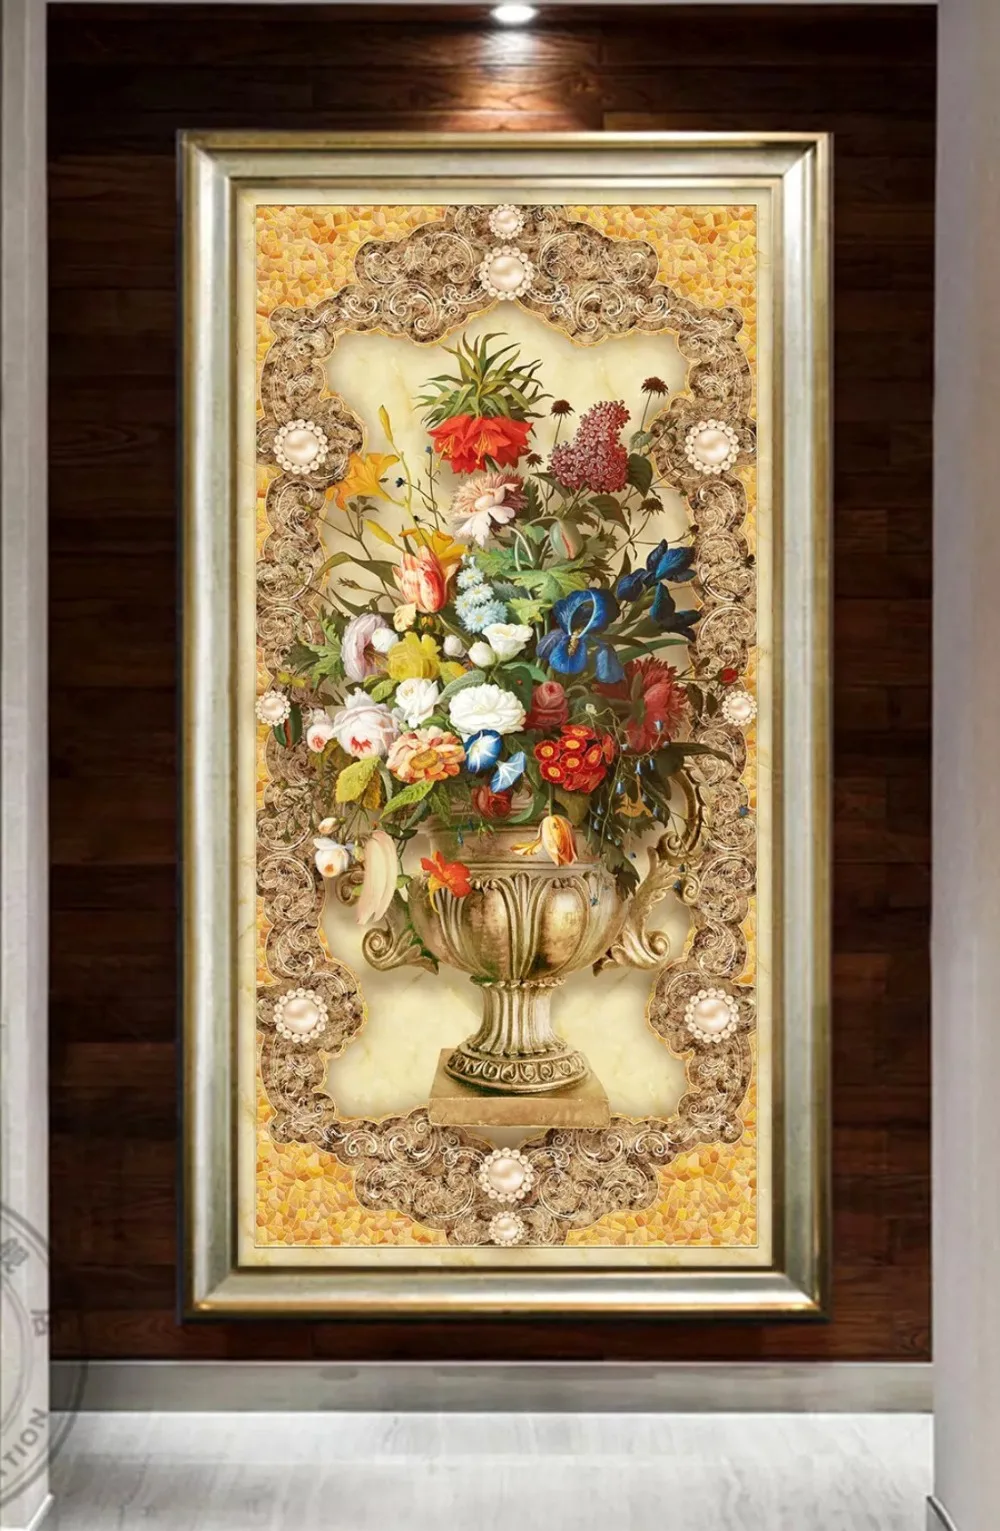 Wellyu на заказ Фреска 3d фото обои Европейский узор Картина маслом цветок мрамор вход обои обой декоративная живопись